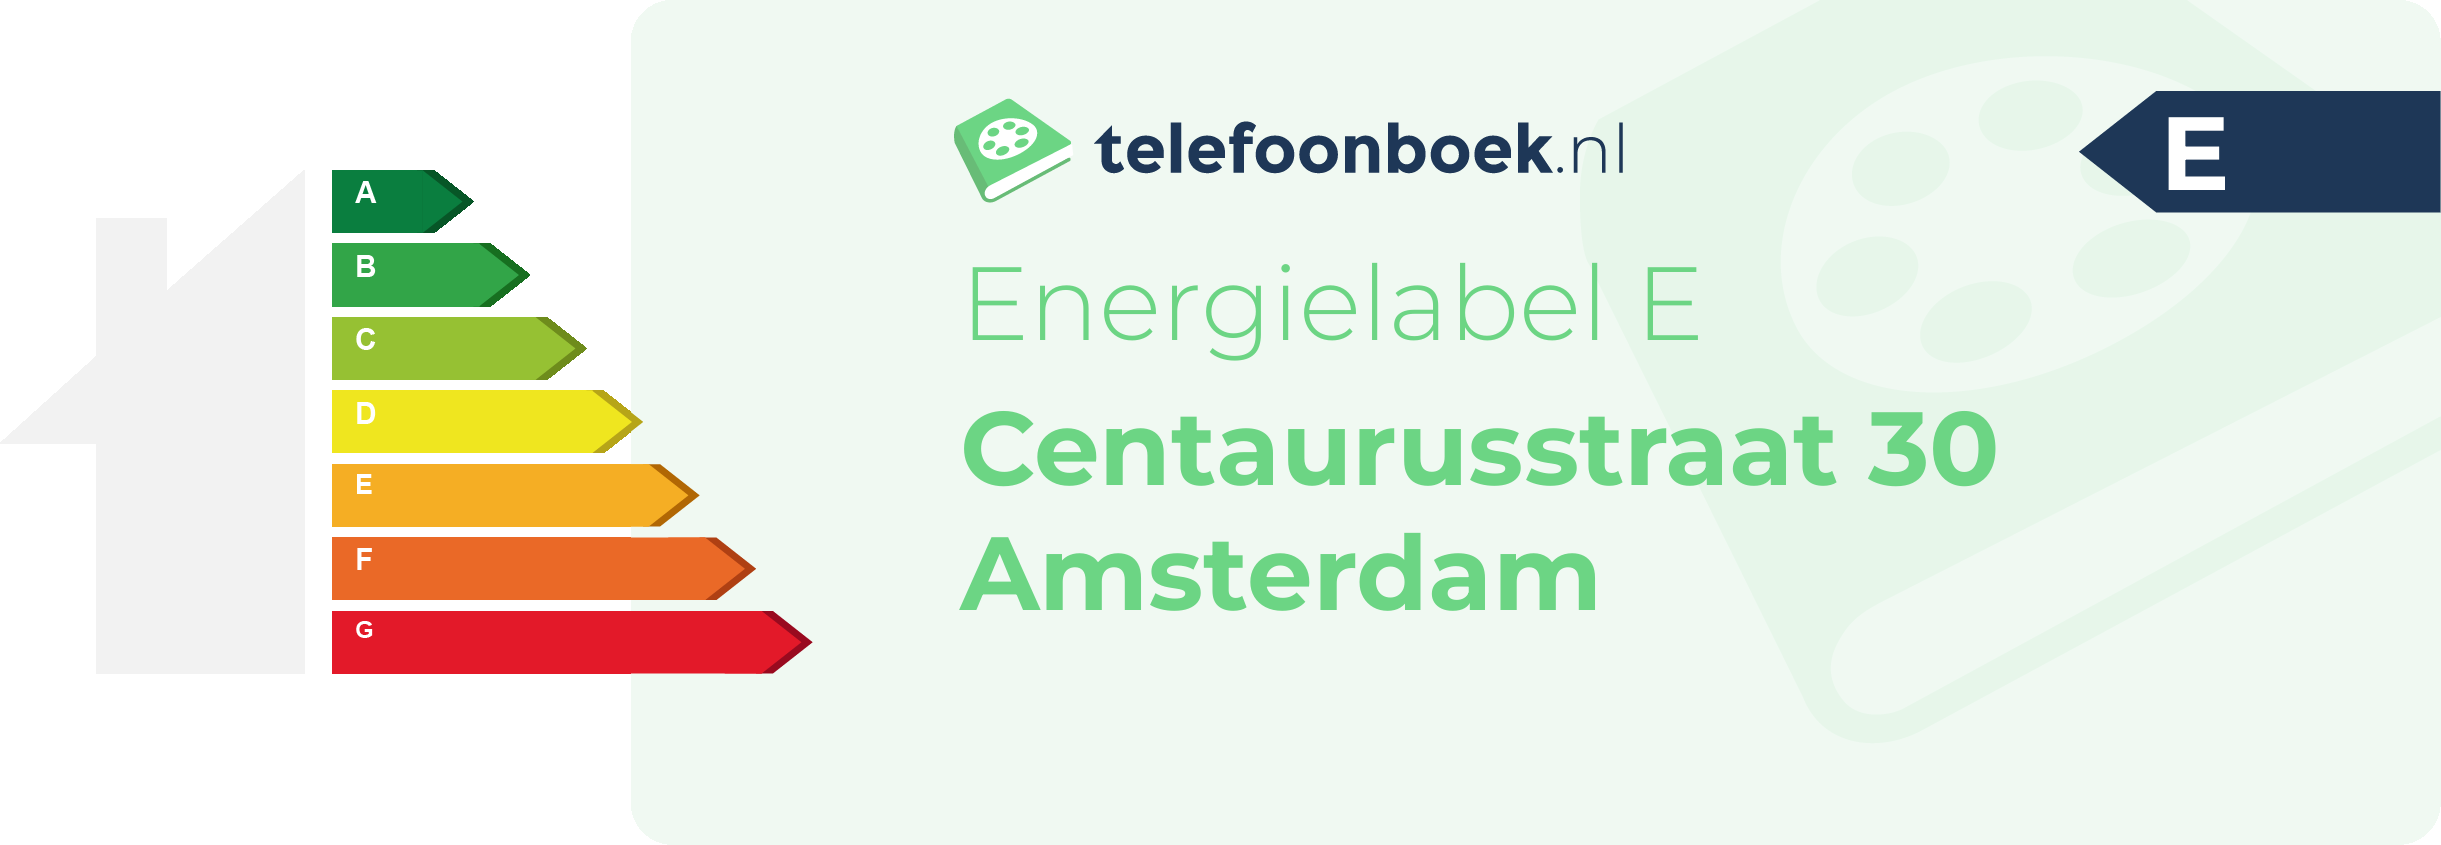 Energielabel Centaurusstraat 30 Amsterdam